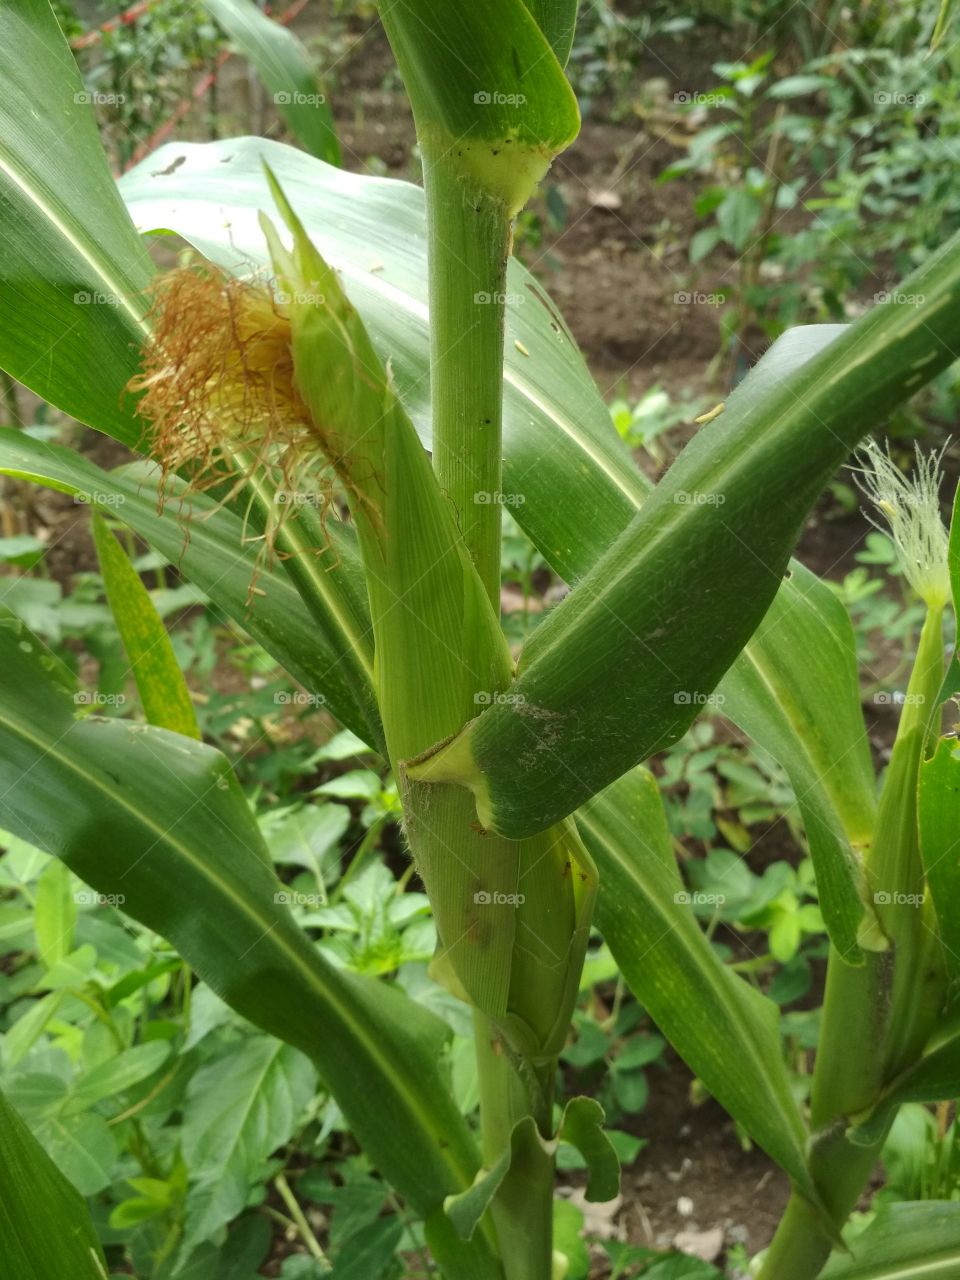 The corn